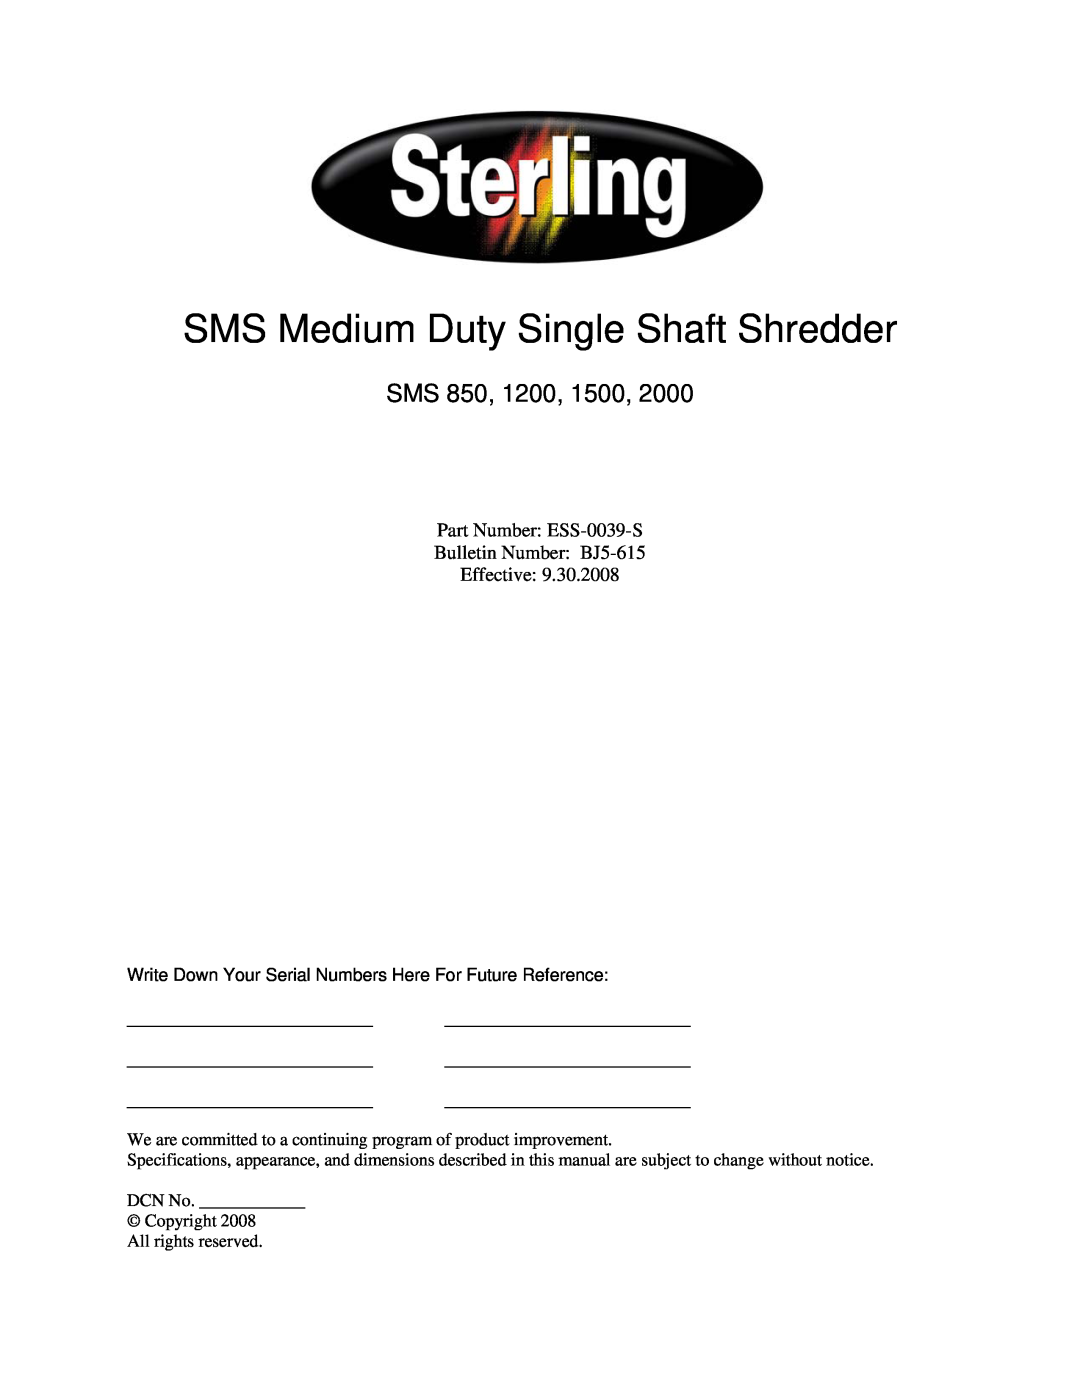 Sterling 2000, 1200, SMS 850, 1500 manual SMS Medium Duty Single Shaft Shredder, Sms 